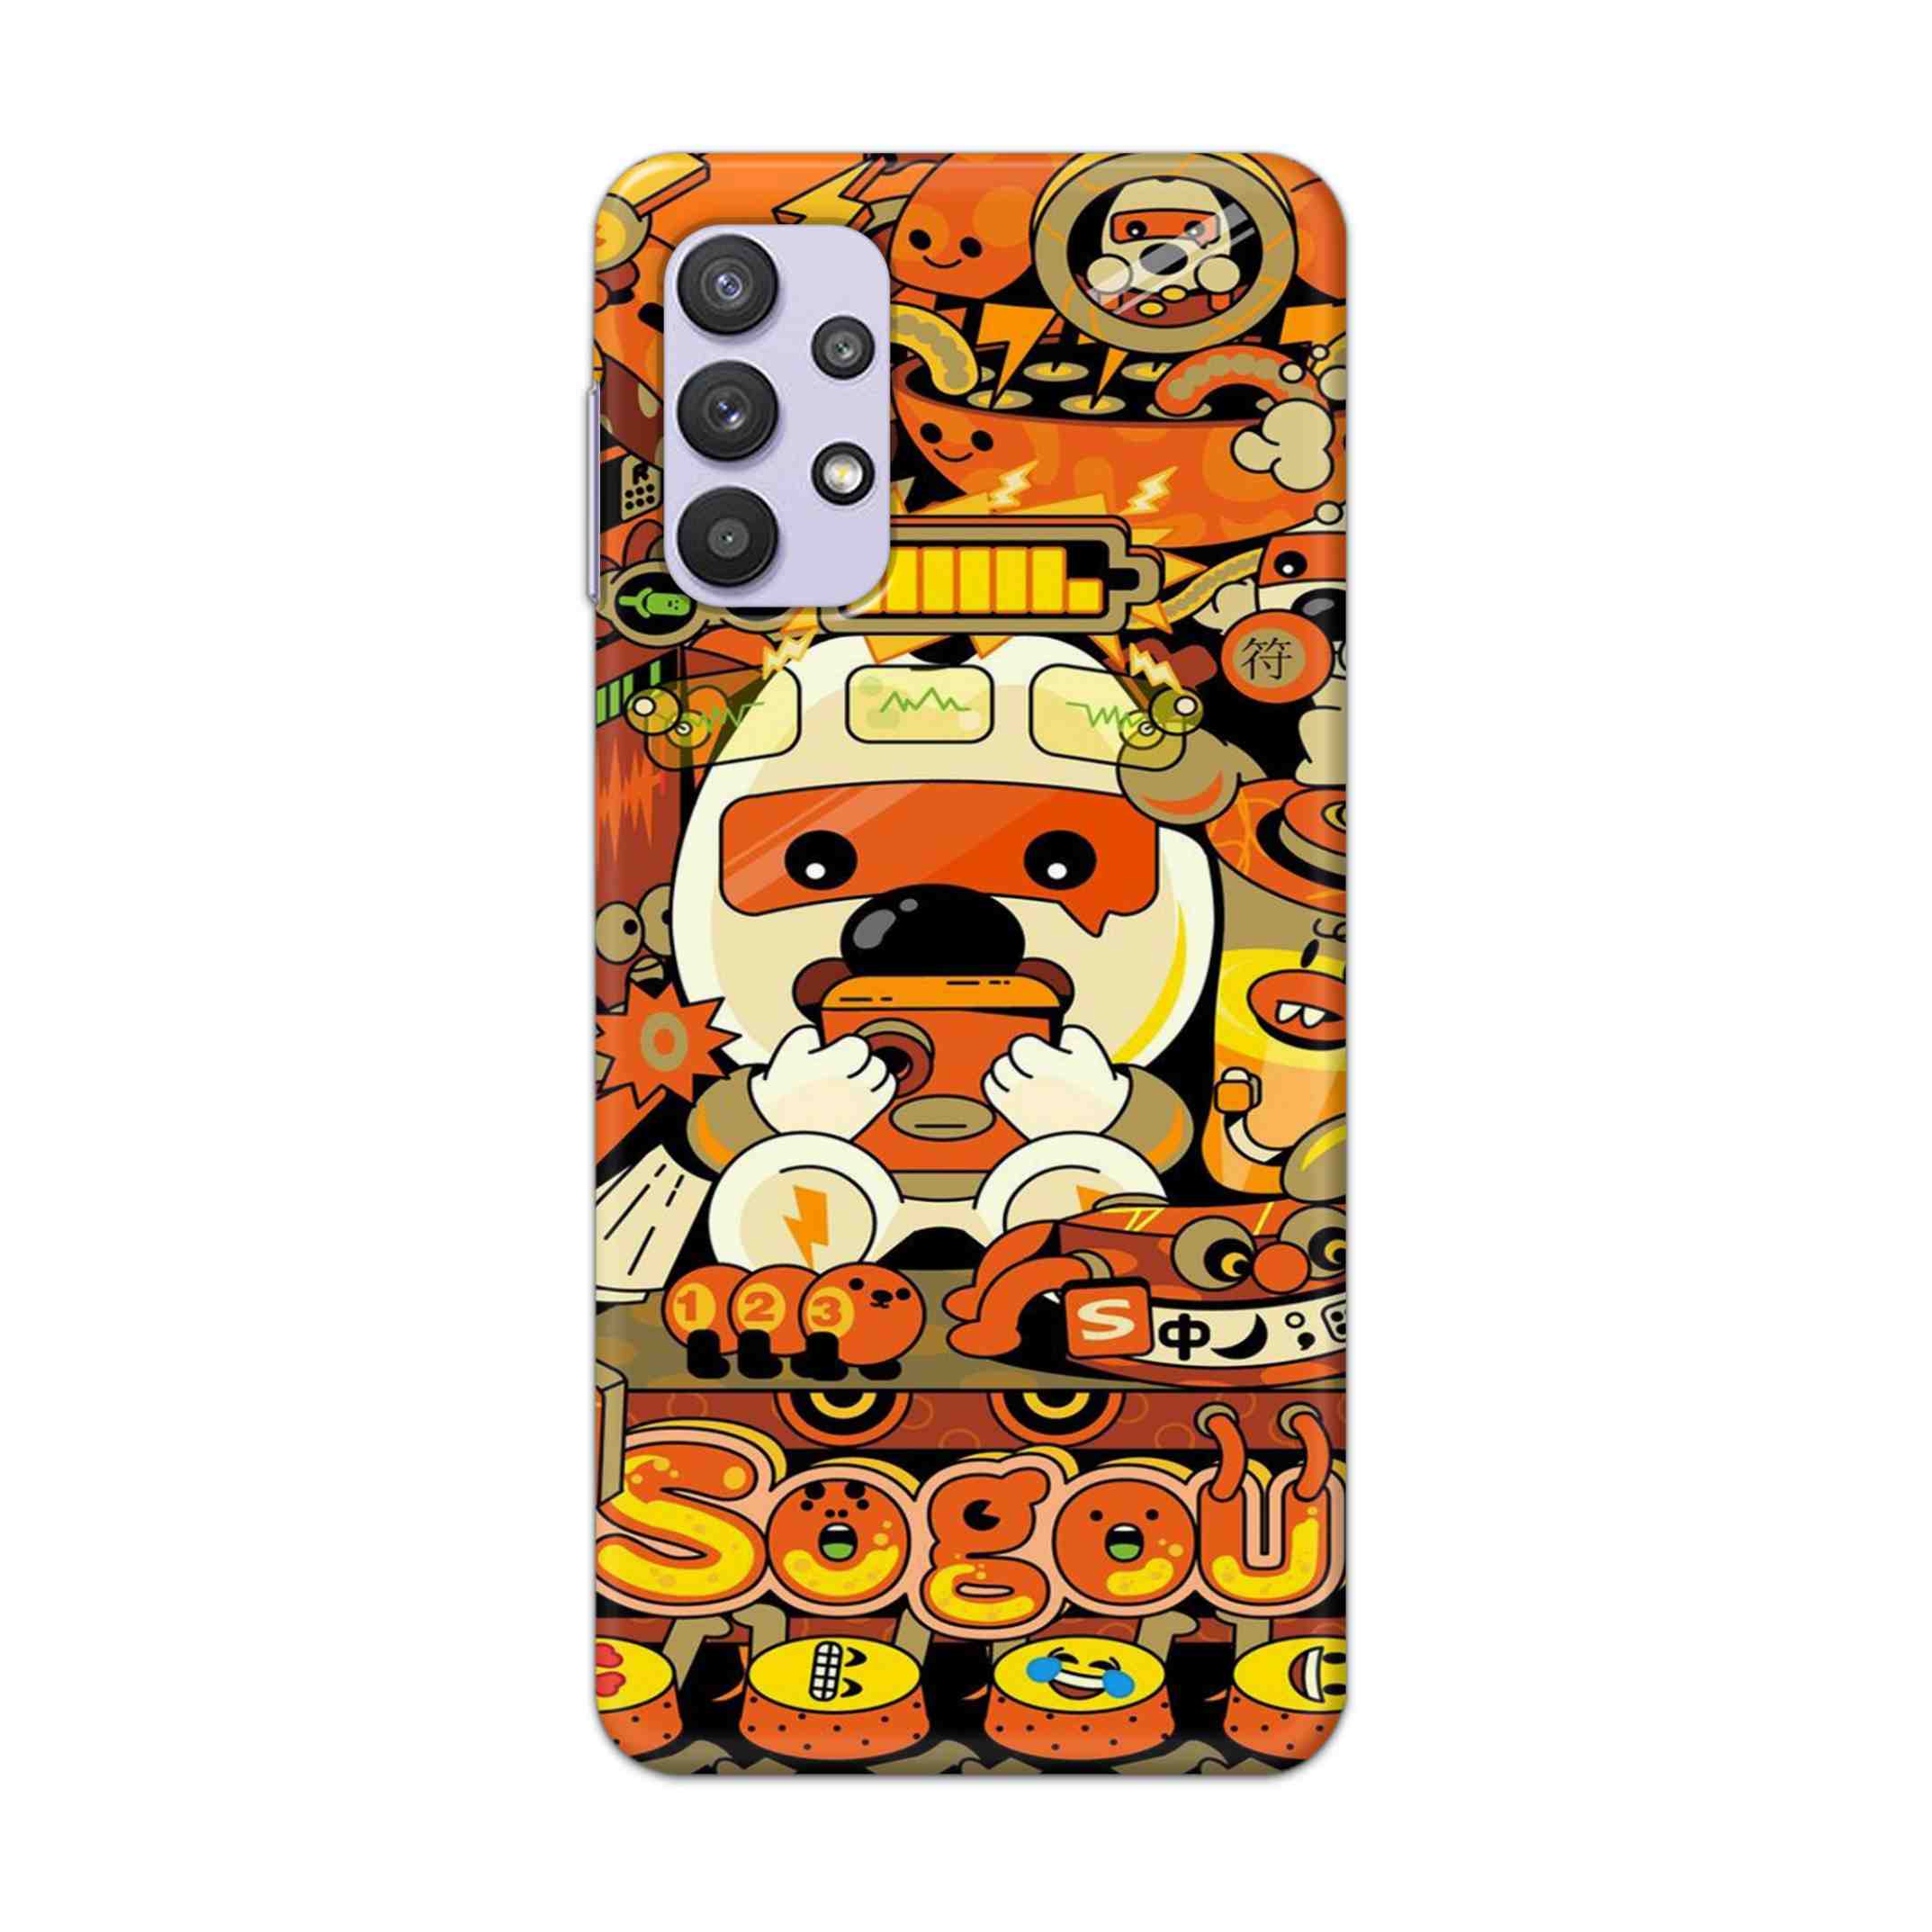 Buy Sogou Hard Back Mobile Phone Case Cover For Samsung A32 5G Online